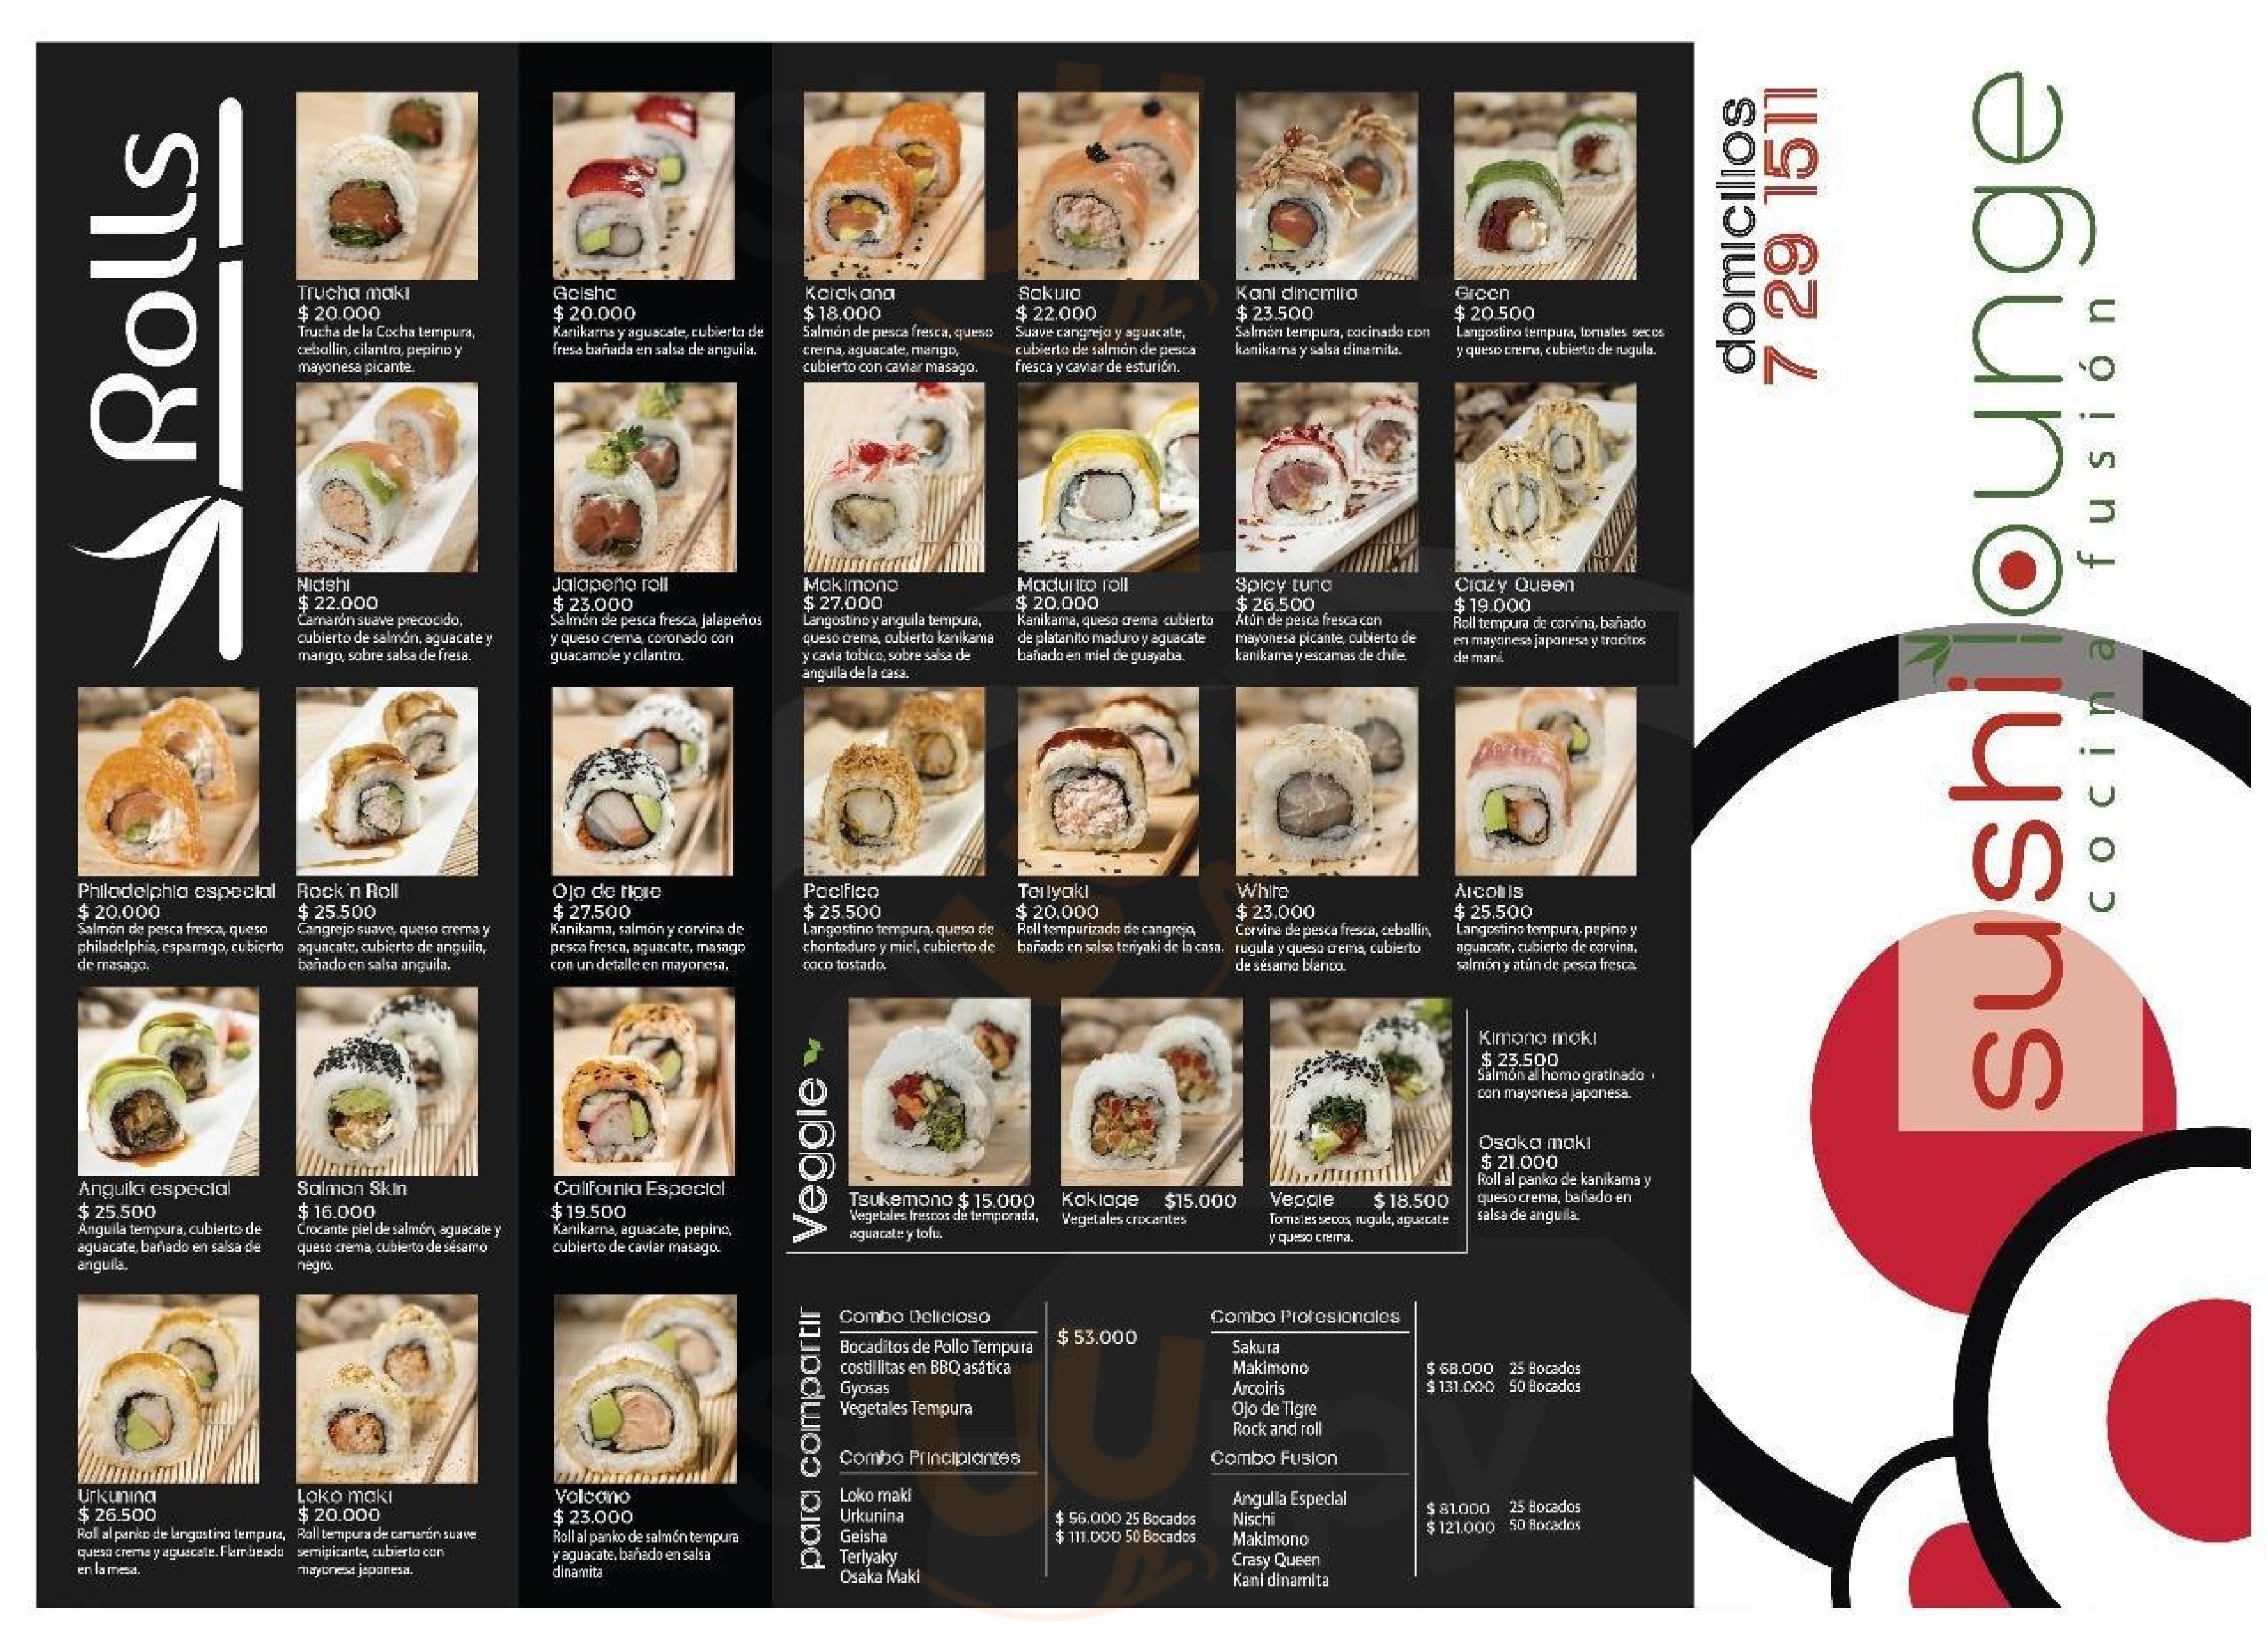 Sushi Lounge Cocina Fusion Pasto Menu - 1